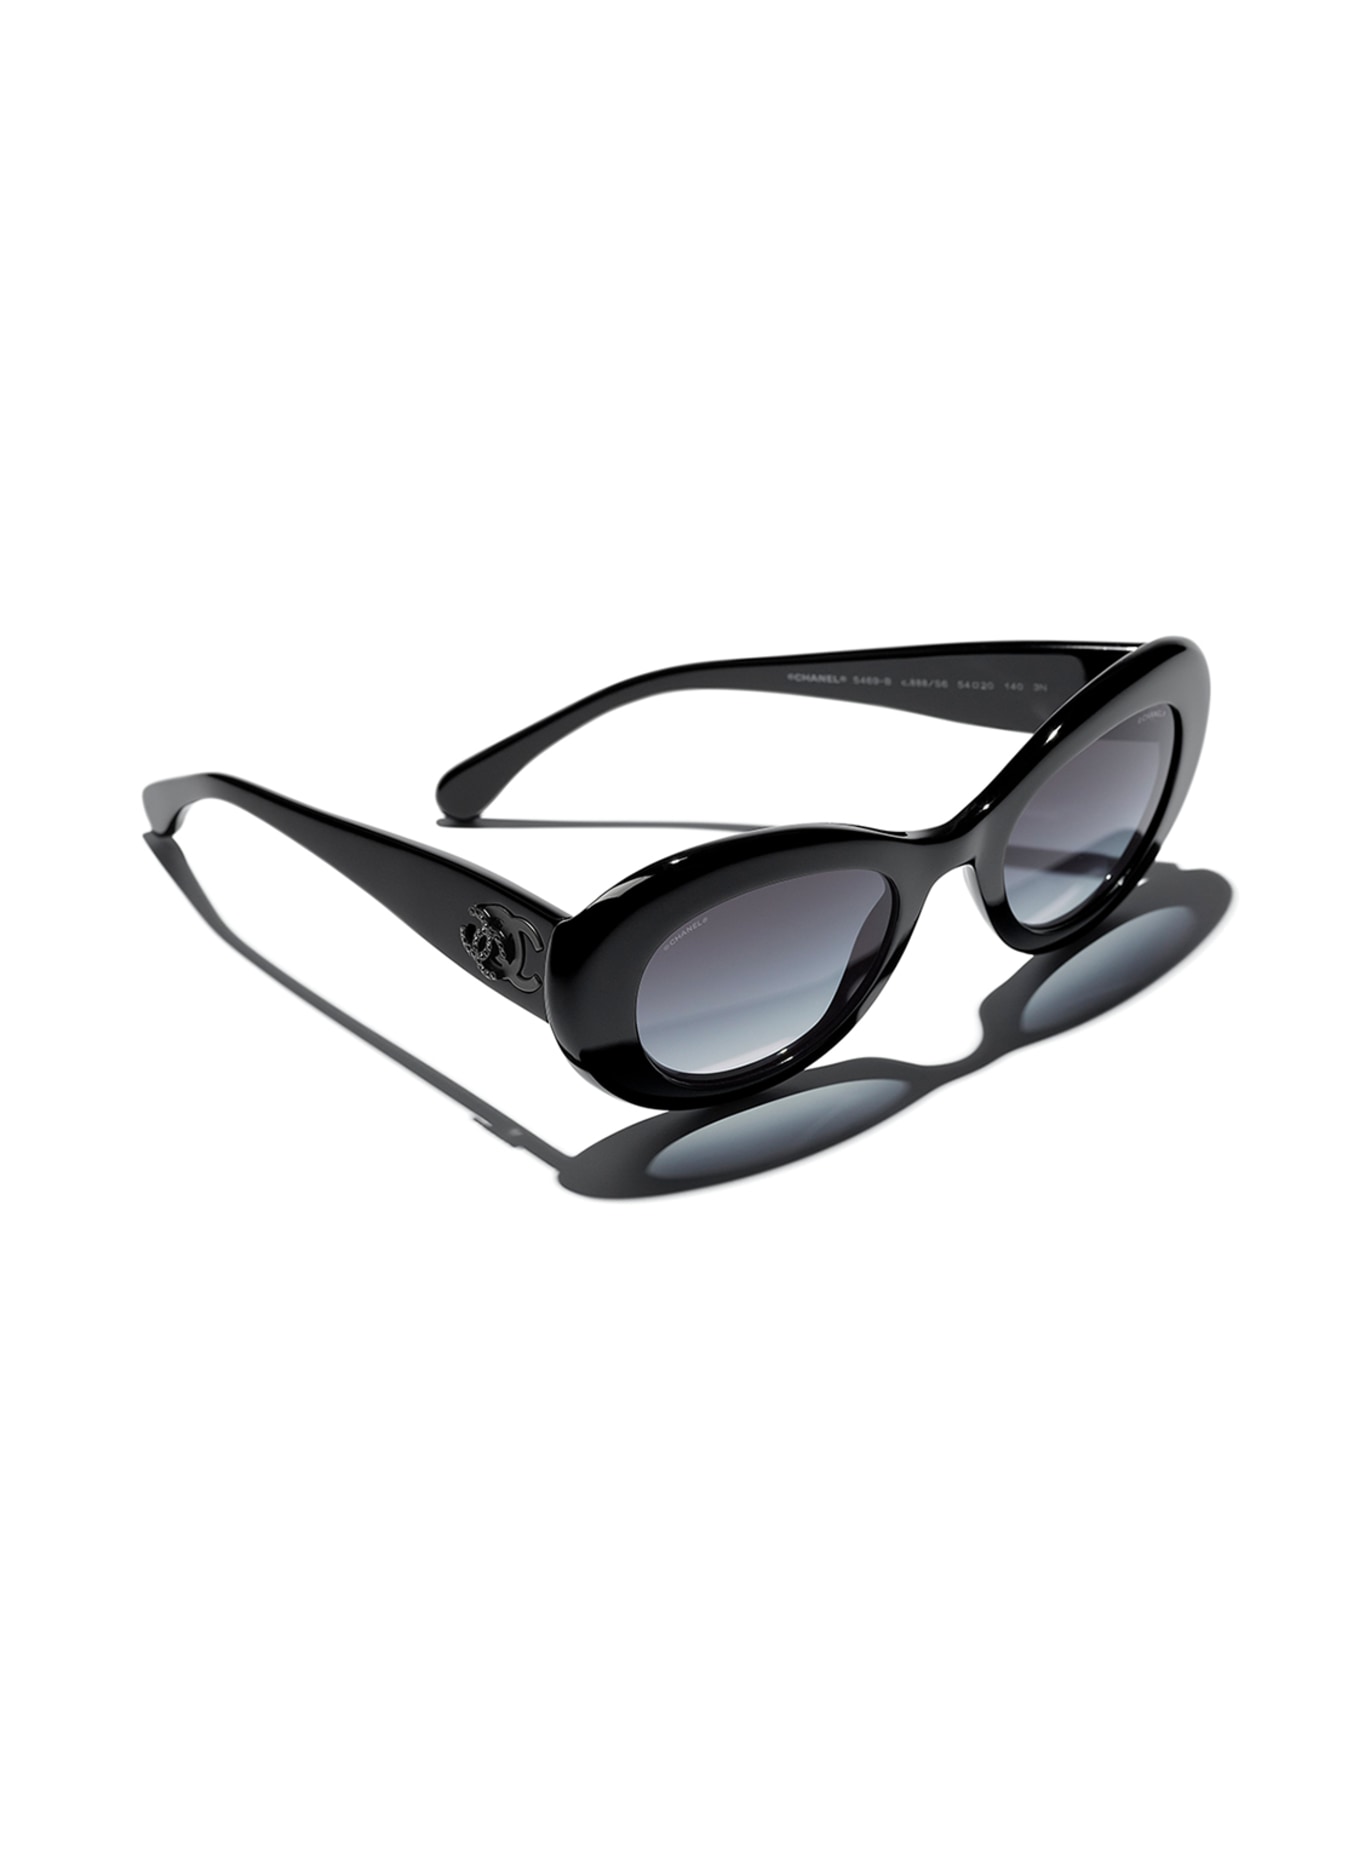 CHANEL Round sunglasses in c888s6 - black/ gray gradient